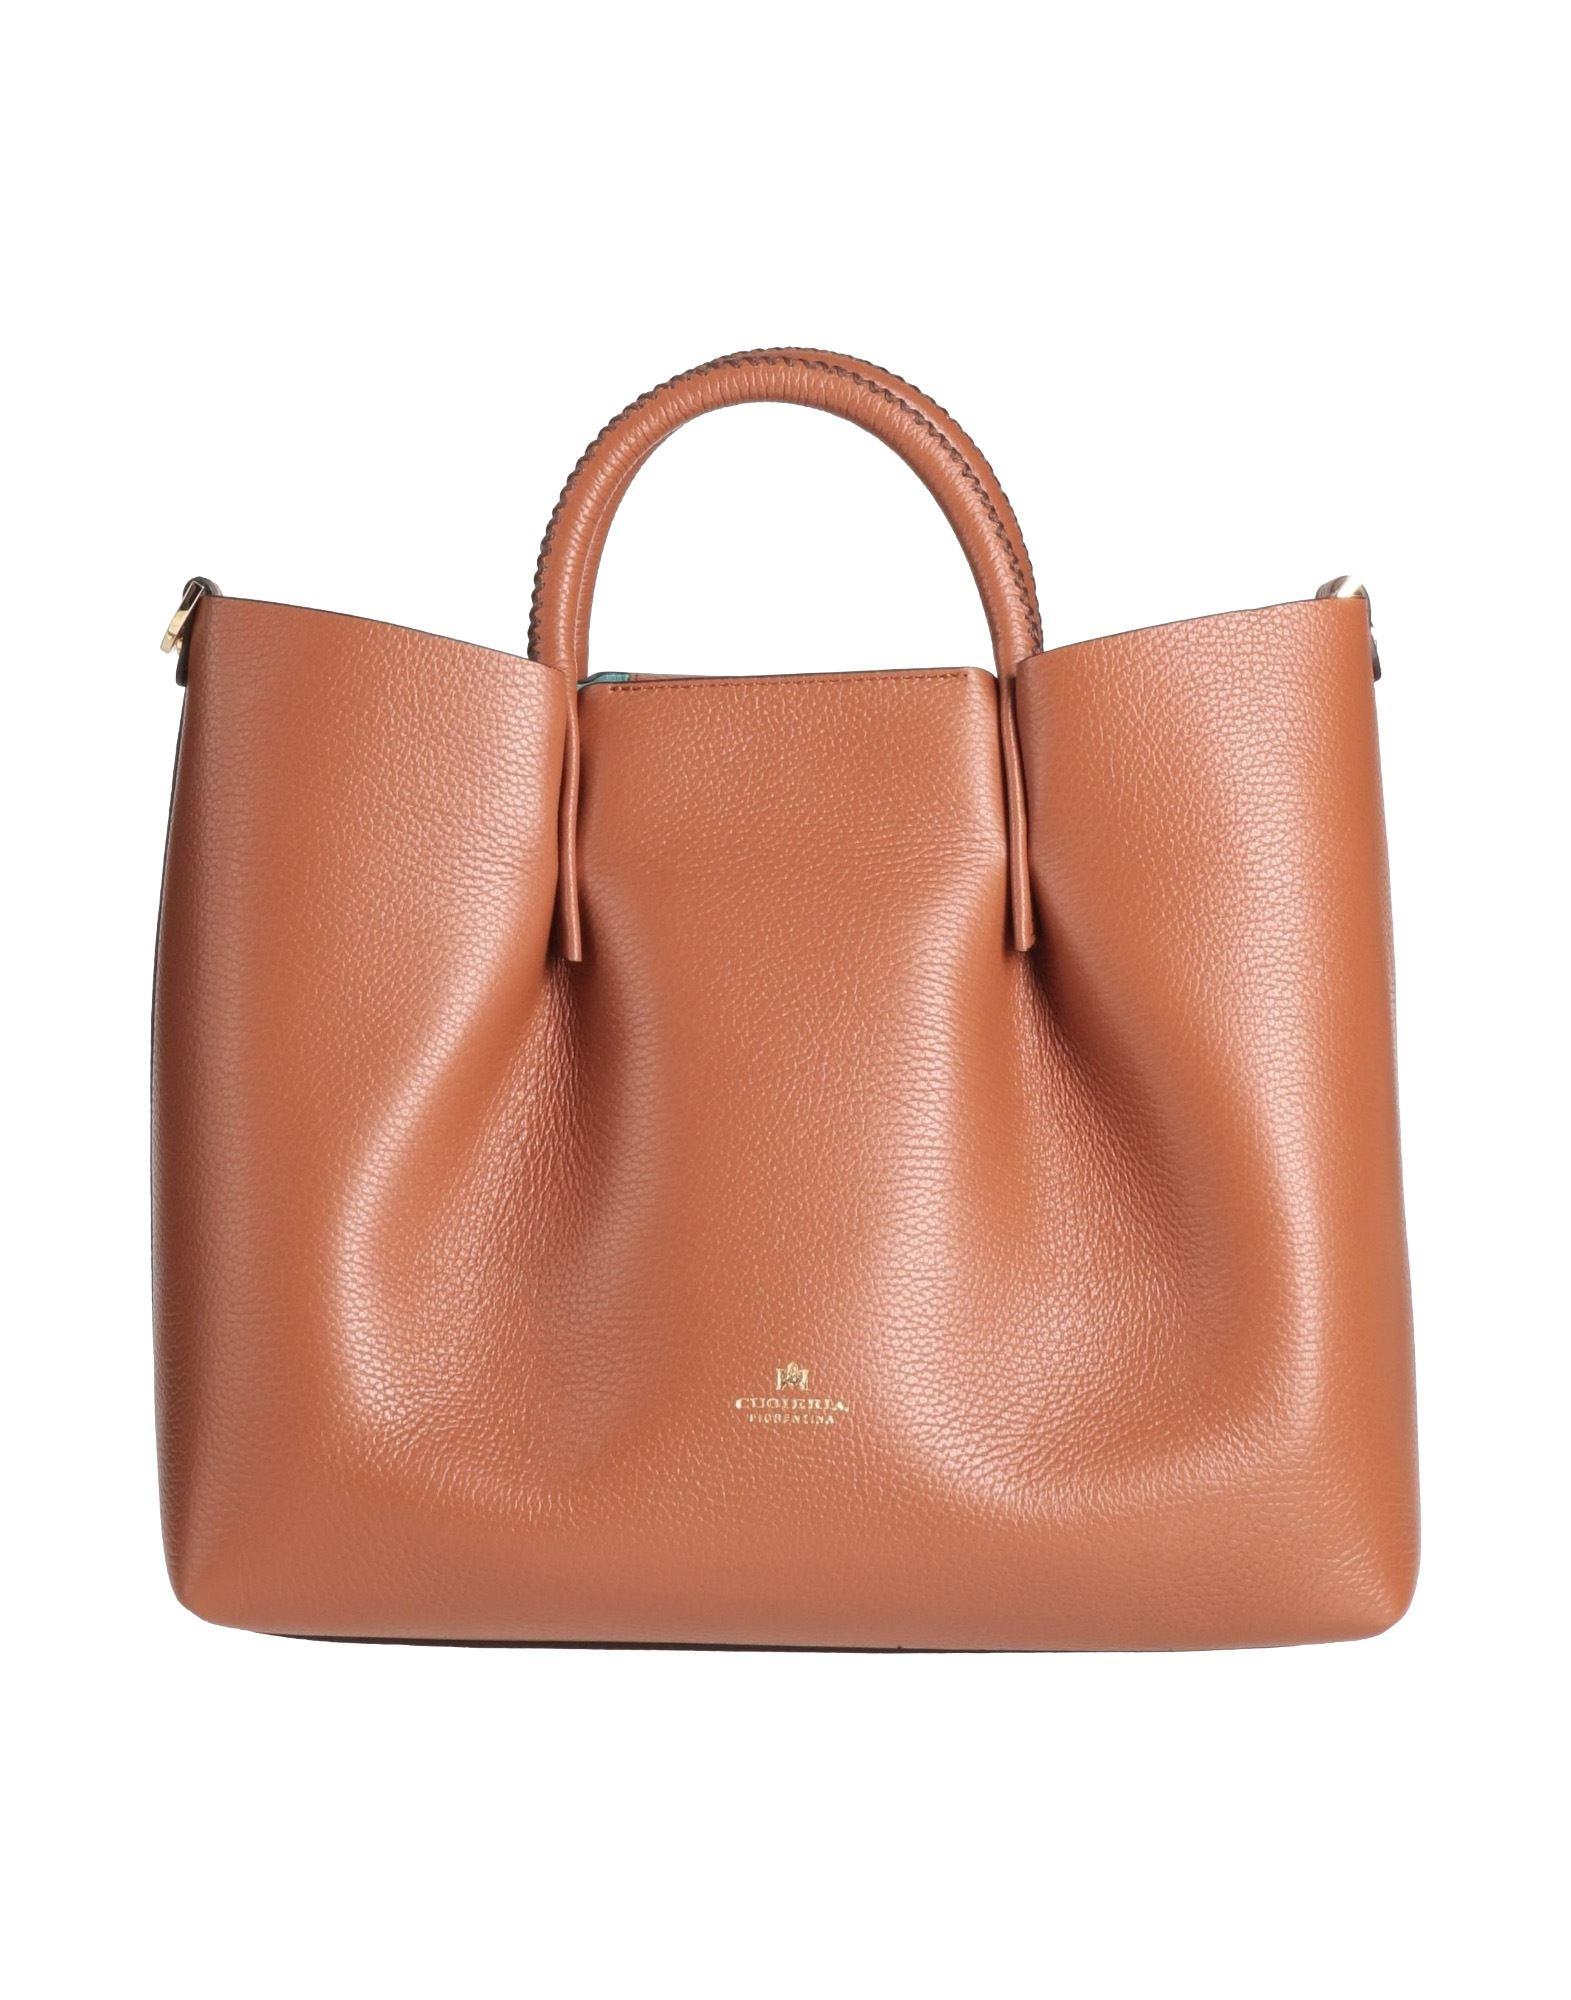 CUOIERIA FIORENTINA Handbag in Brown | Lyst